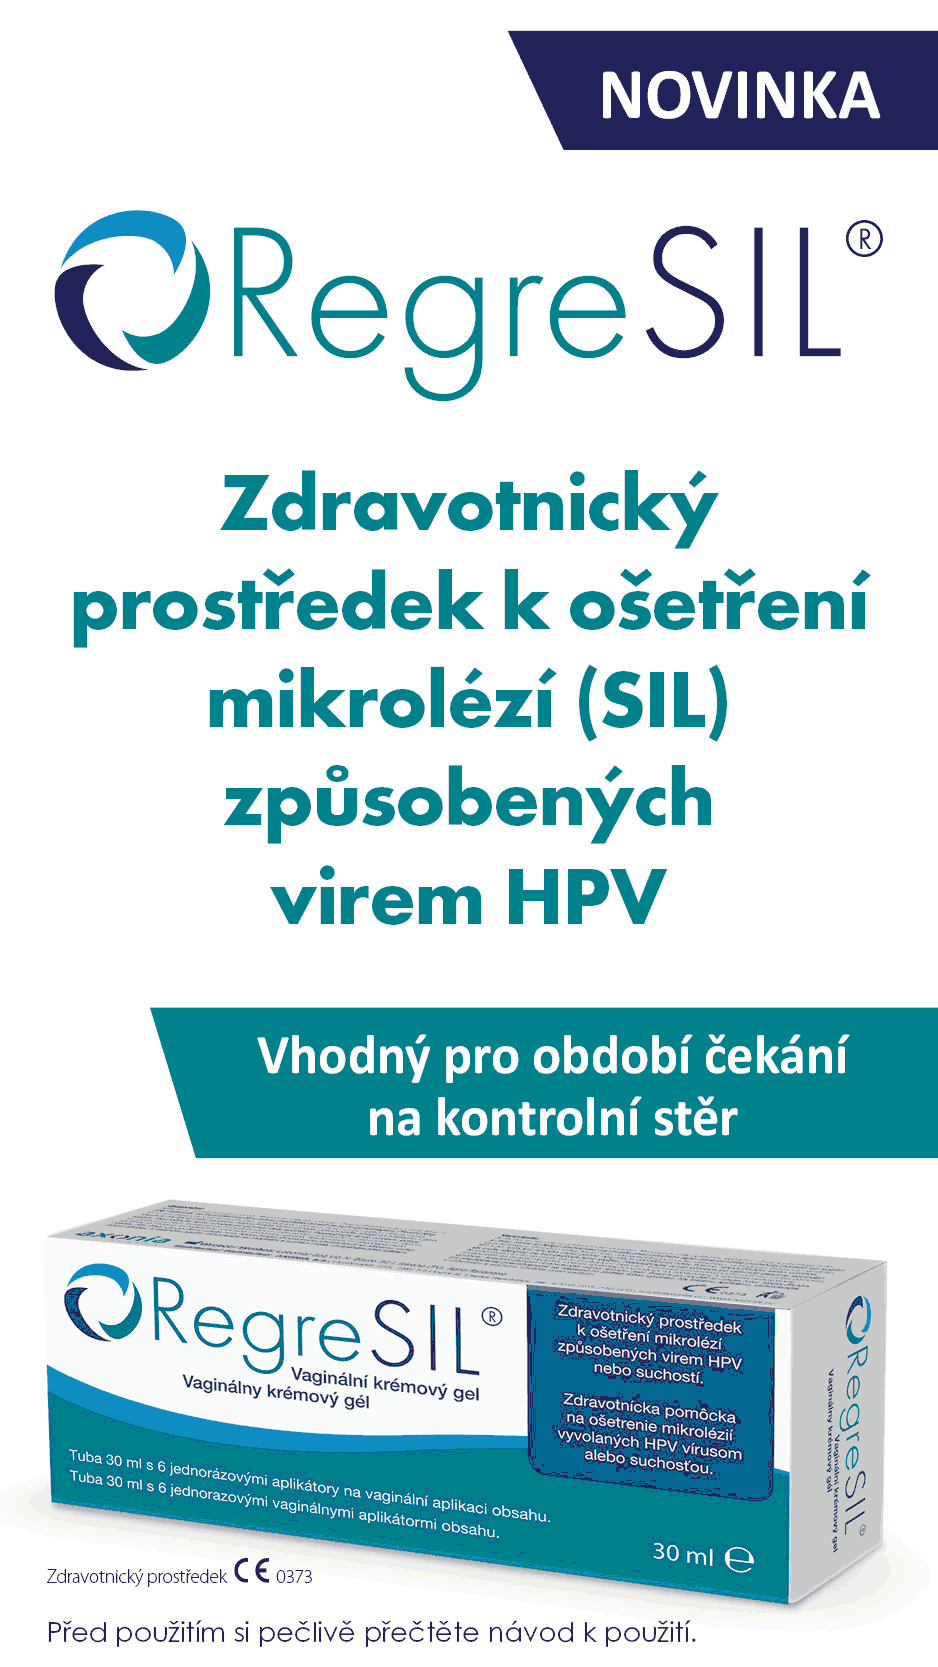 Ockovani hpv zdarma - Hpv and neck lumps